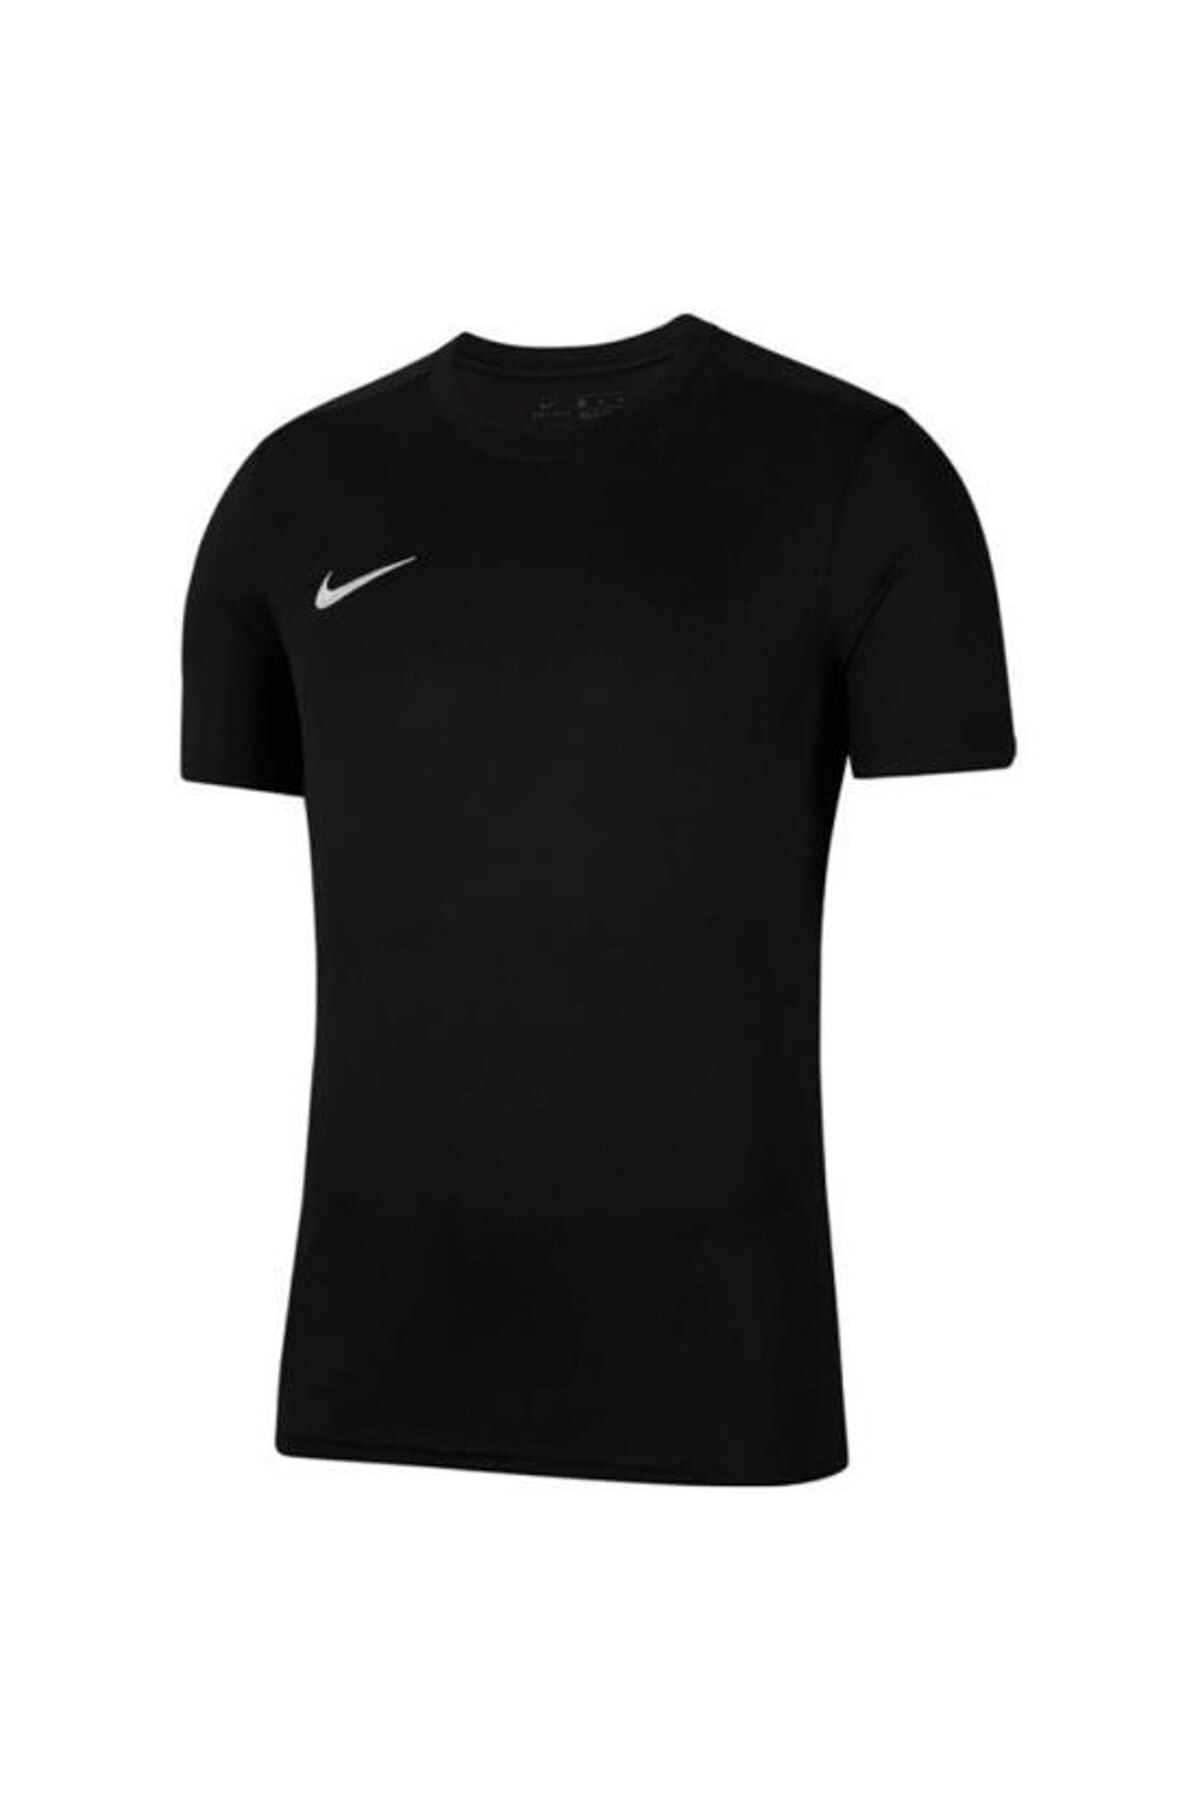 Nike Dry Park Vıı Erkek Tişört Bv6708-010